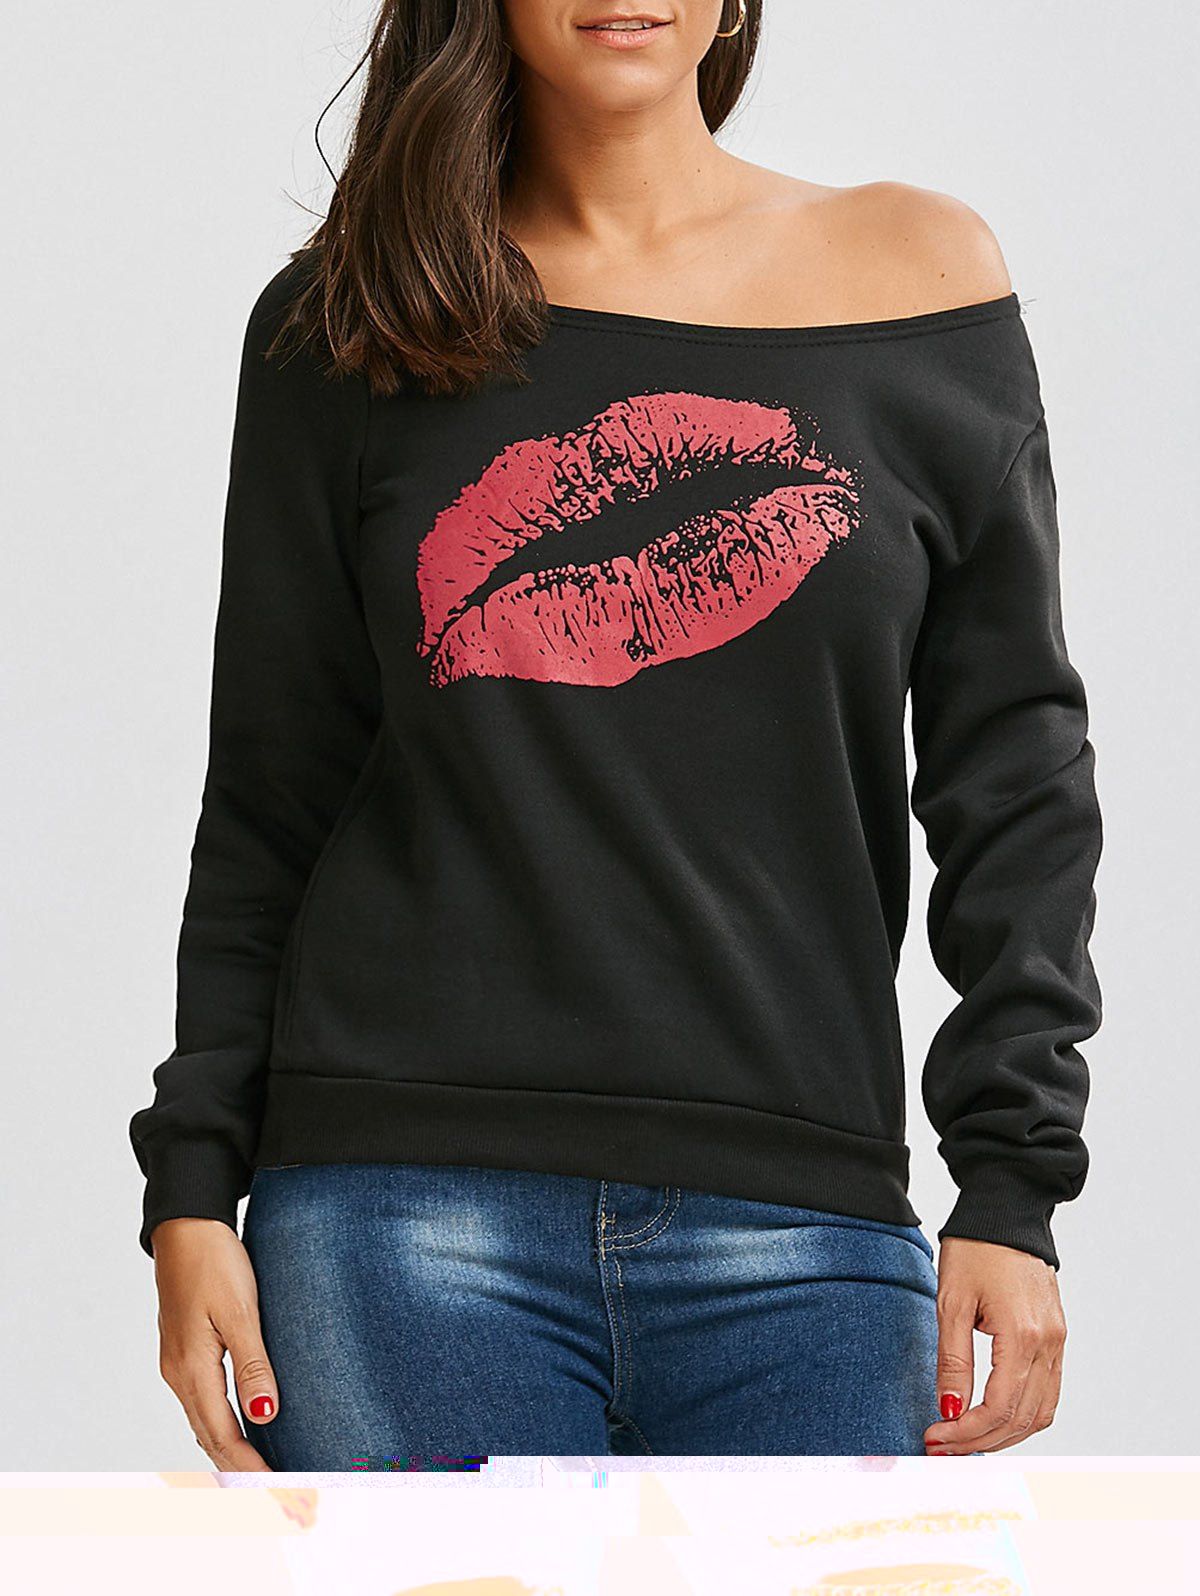 

Skew Collar Lip Print Sweatshirt, Red with black